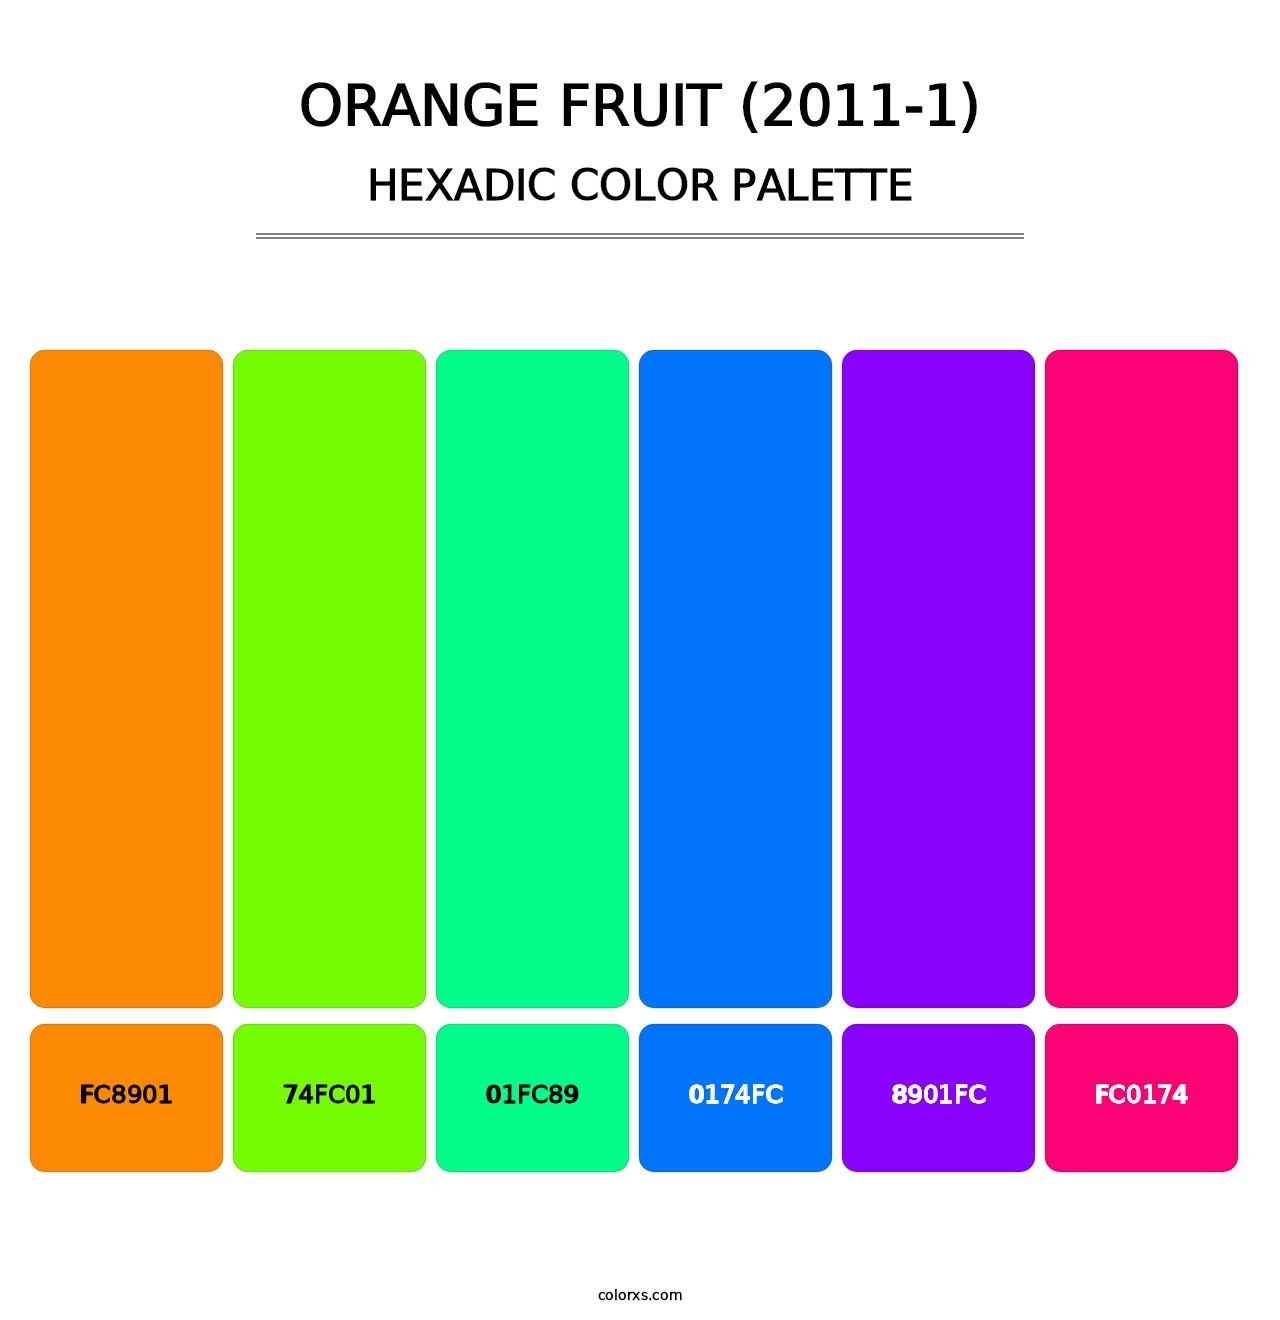 Orange Fruit (2011-1) - Hexadic Color Palette